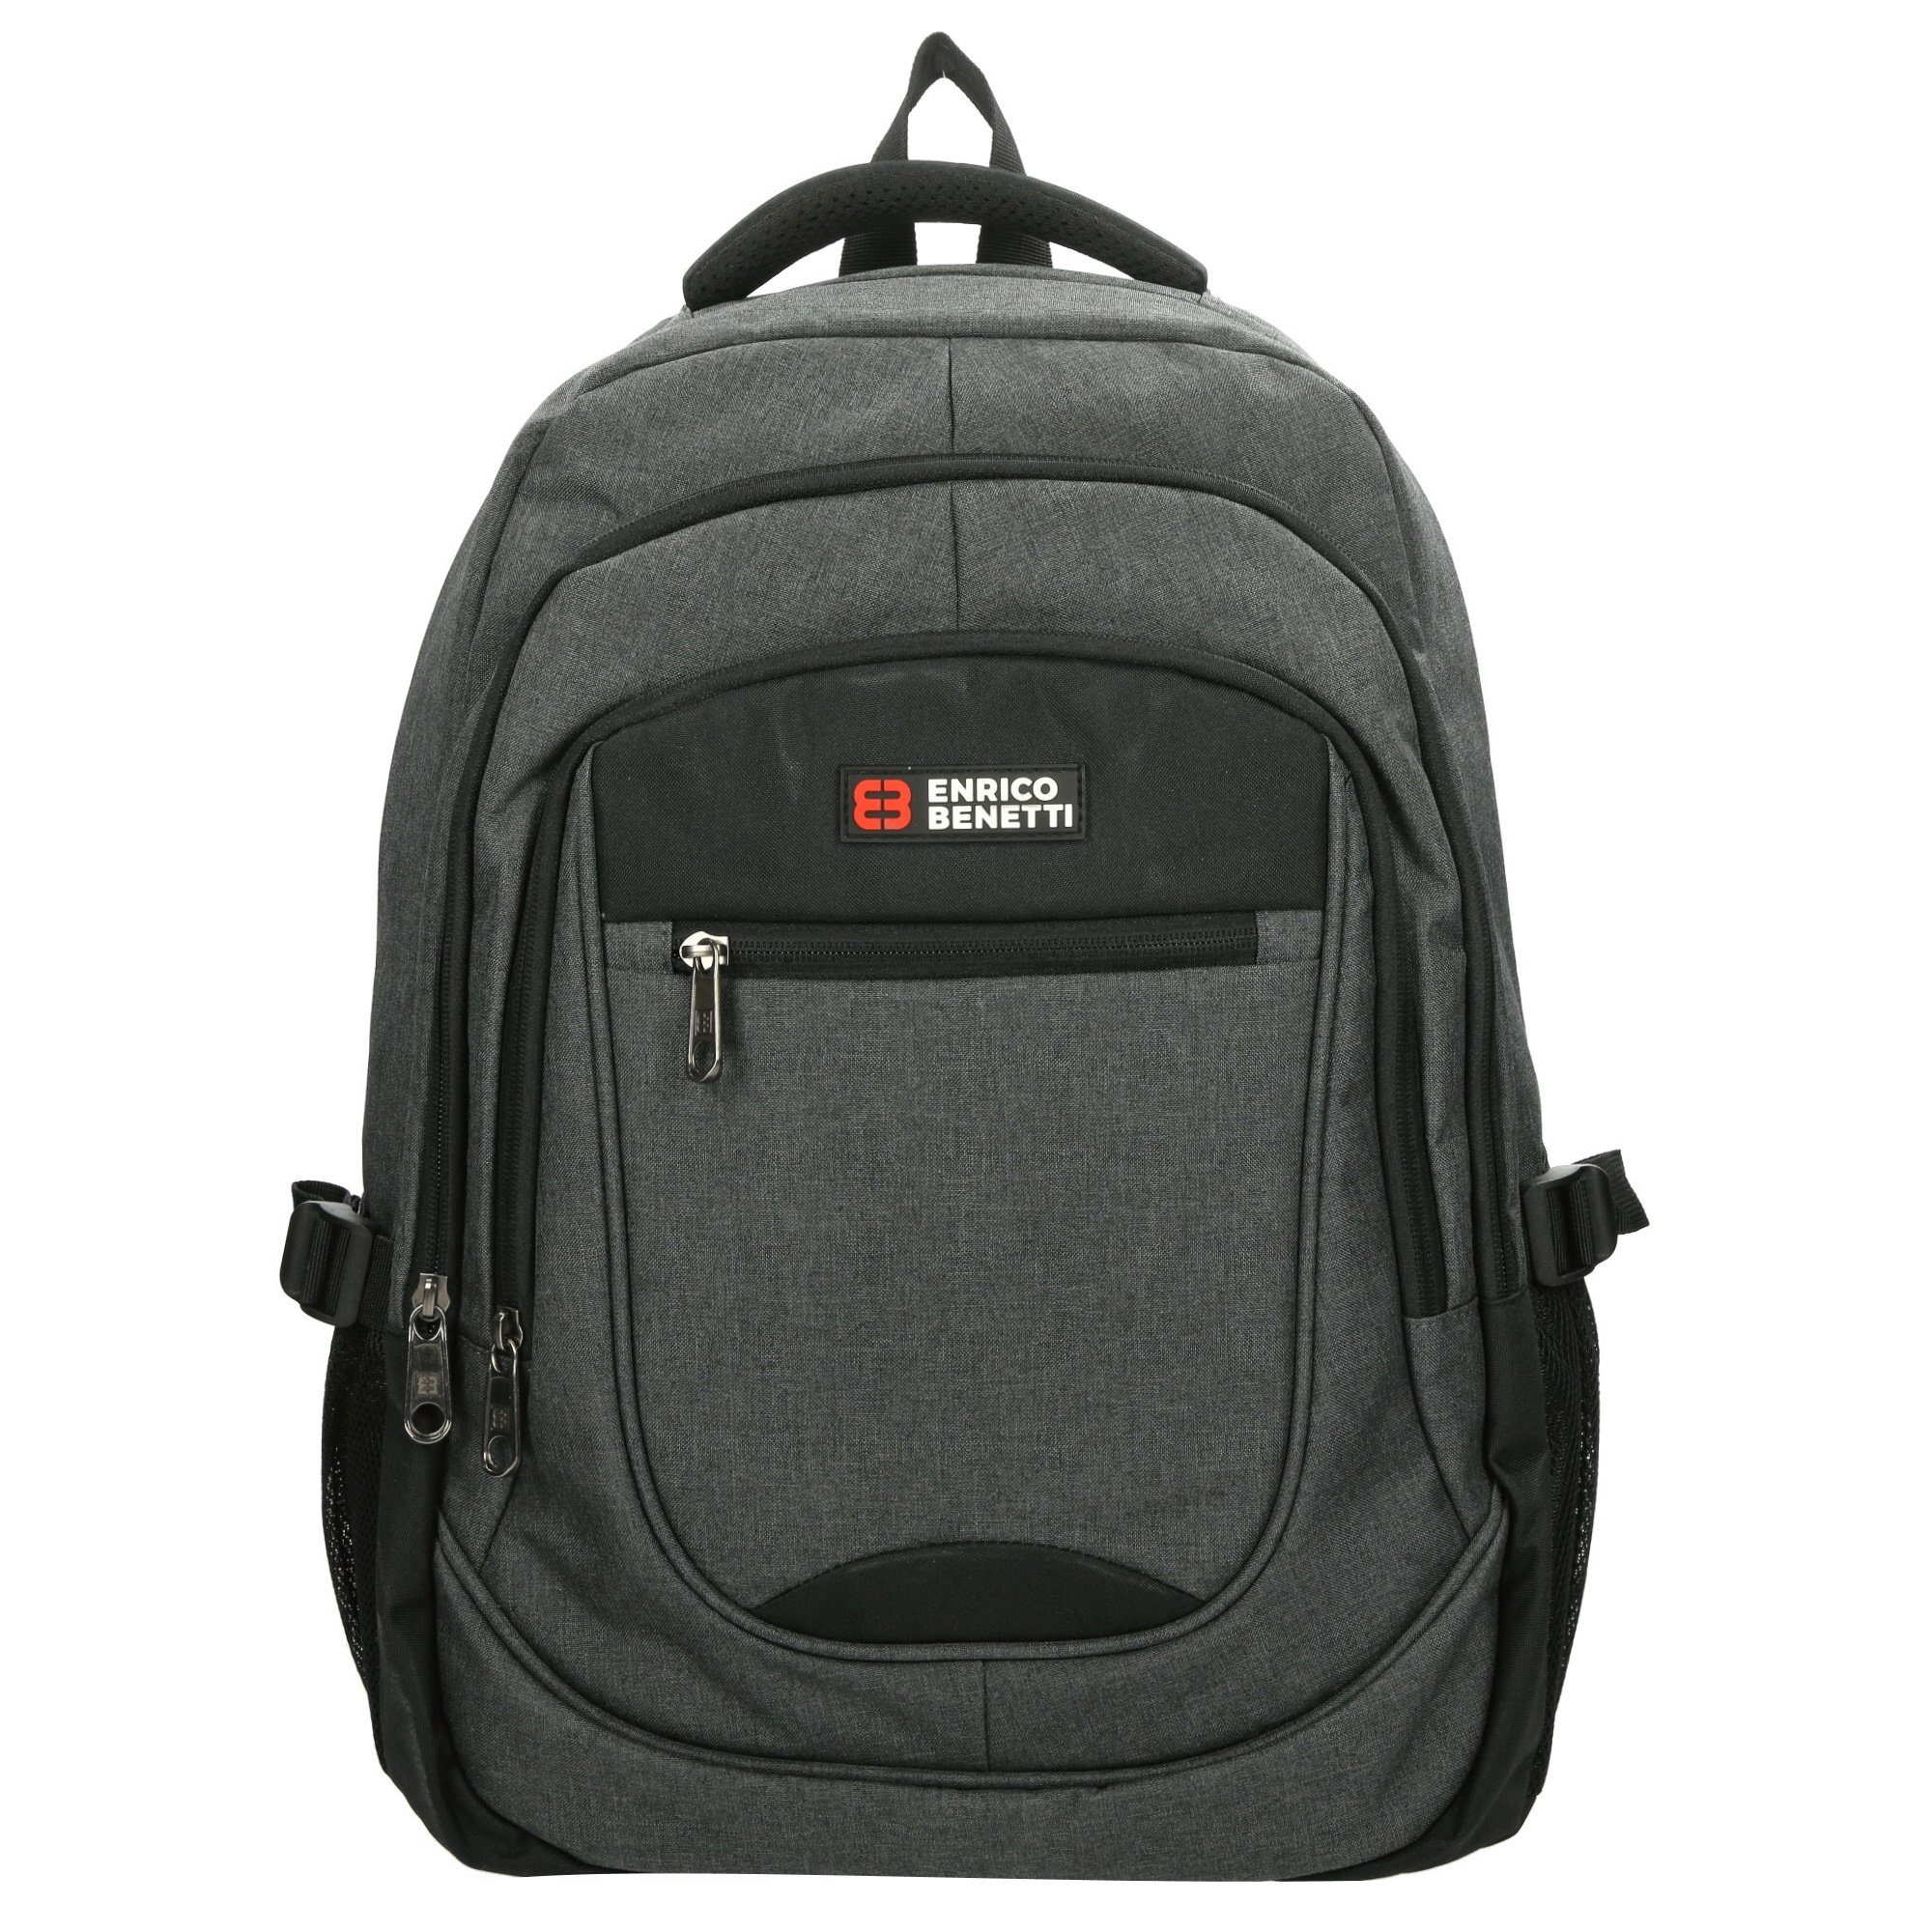 Laptoprucksack Backpack, Notebooktasche Grau HTI-Living Laptoprucksack